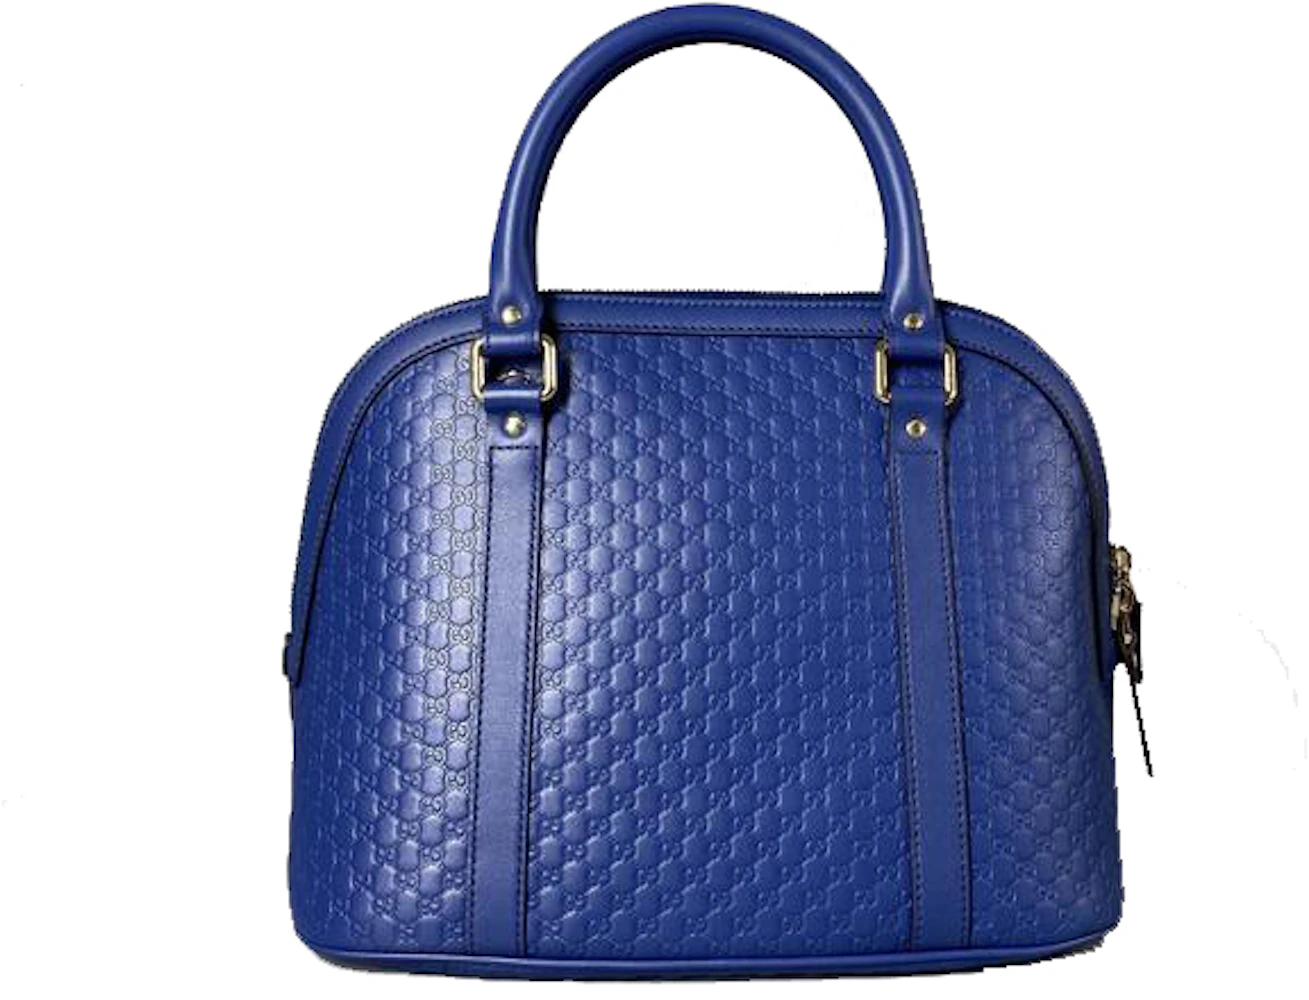 Gucci Convertible Dome Medium Microguccissima Blue in Leather with ...